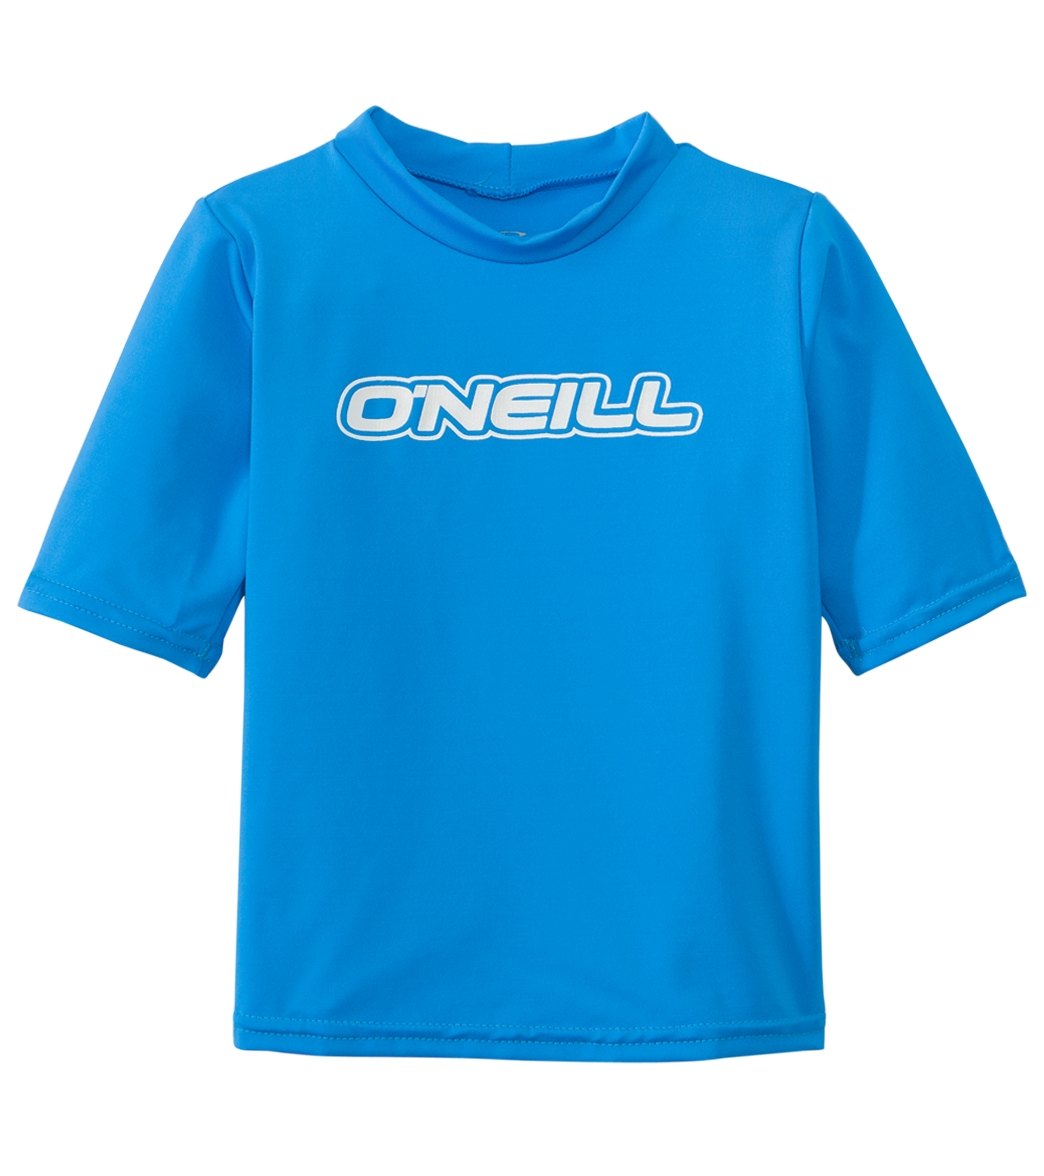 O'neill Toddler Basic Skins Short Sleeve Shirt Rash Tee - Brite Blue 2T Spandex - Swimoutlet.com